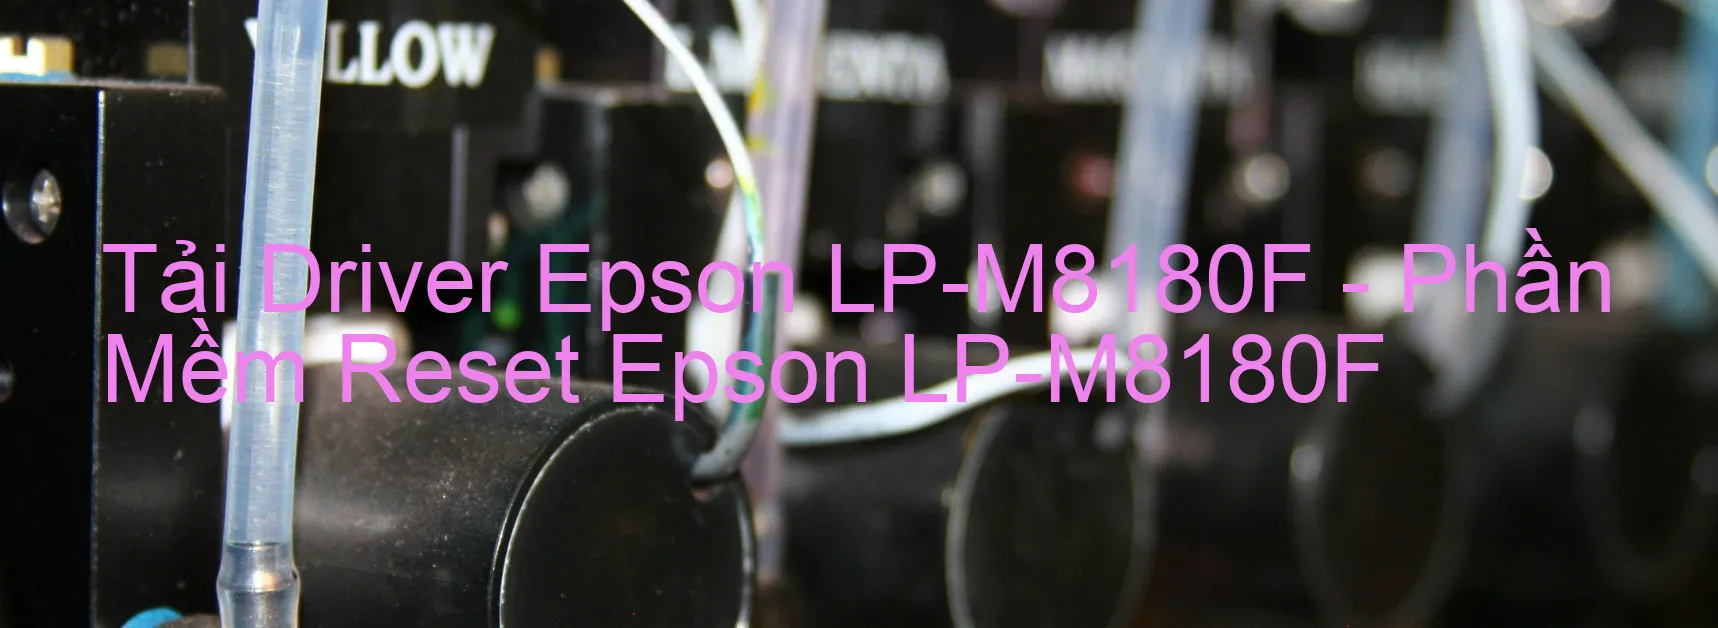 Driver Epson LP-M8180F, Phần Mềm Reset Epson LP-M8180F